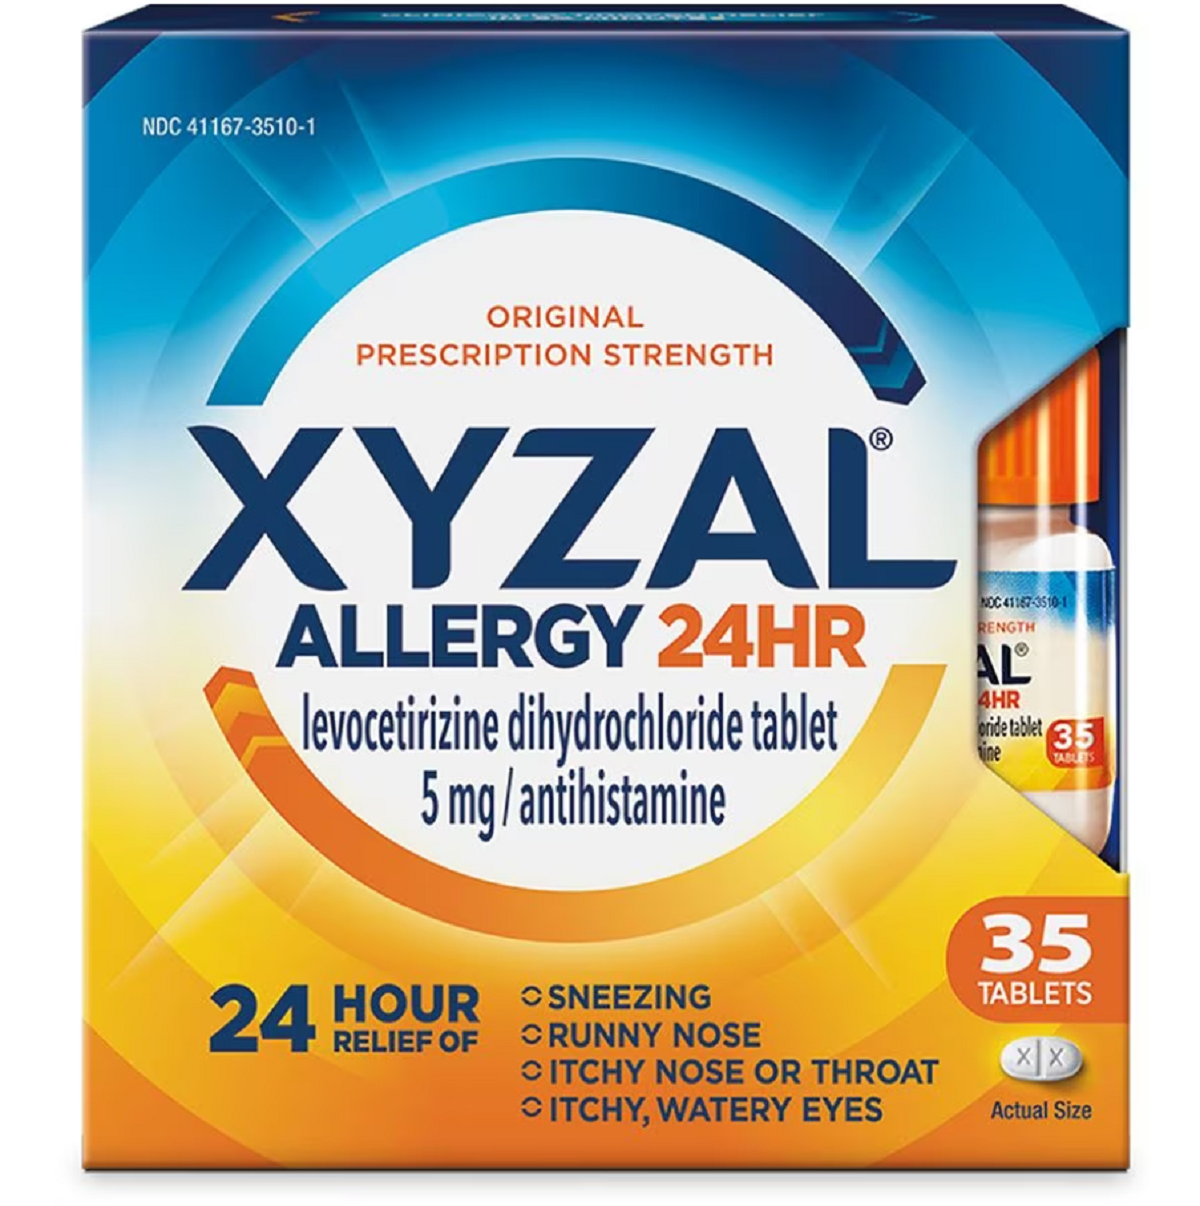 $5 Off Xyzal Allergy 24HR Printable Coupon